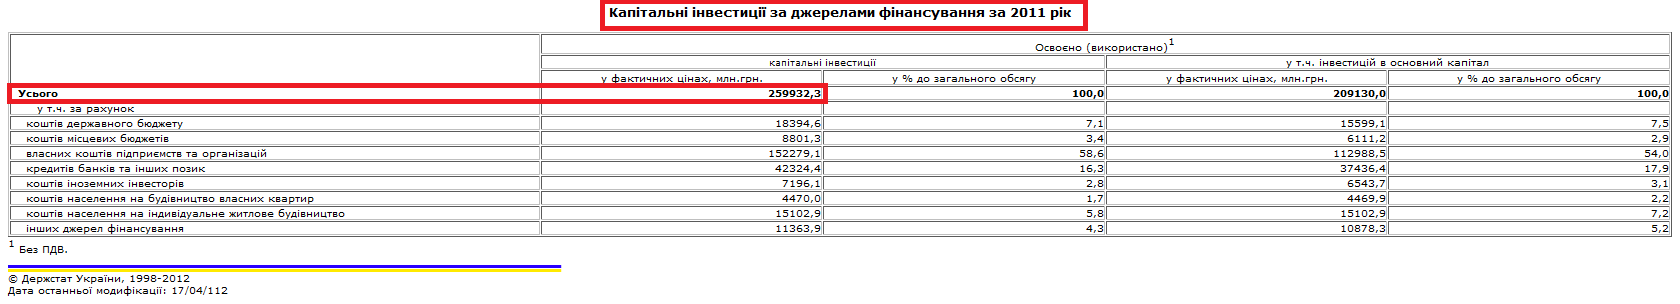 http://www.ukrstat.gov.ua/operativ/operativ2011/ibd/kindj/infin_u/infin04_11u.htm